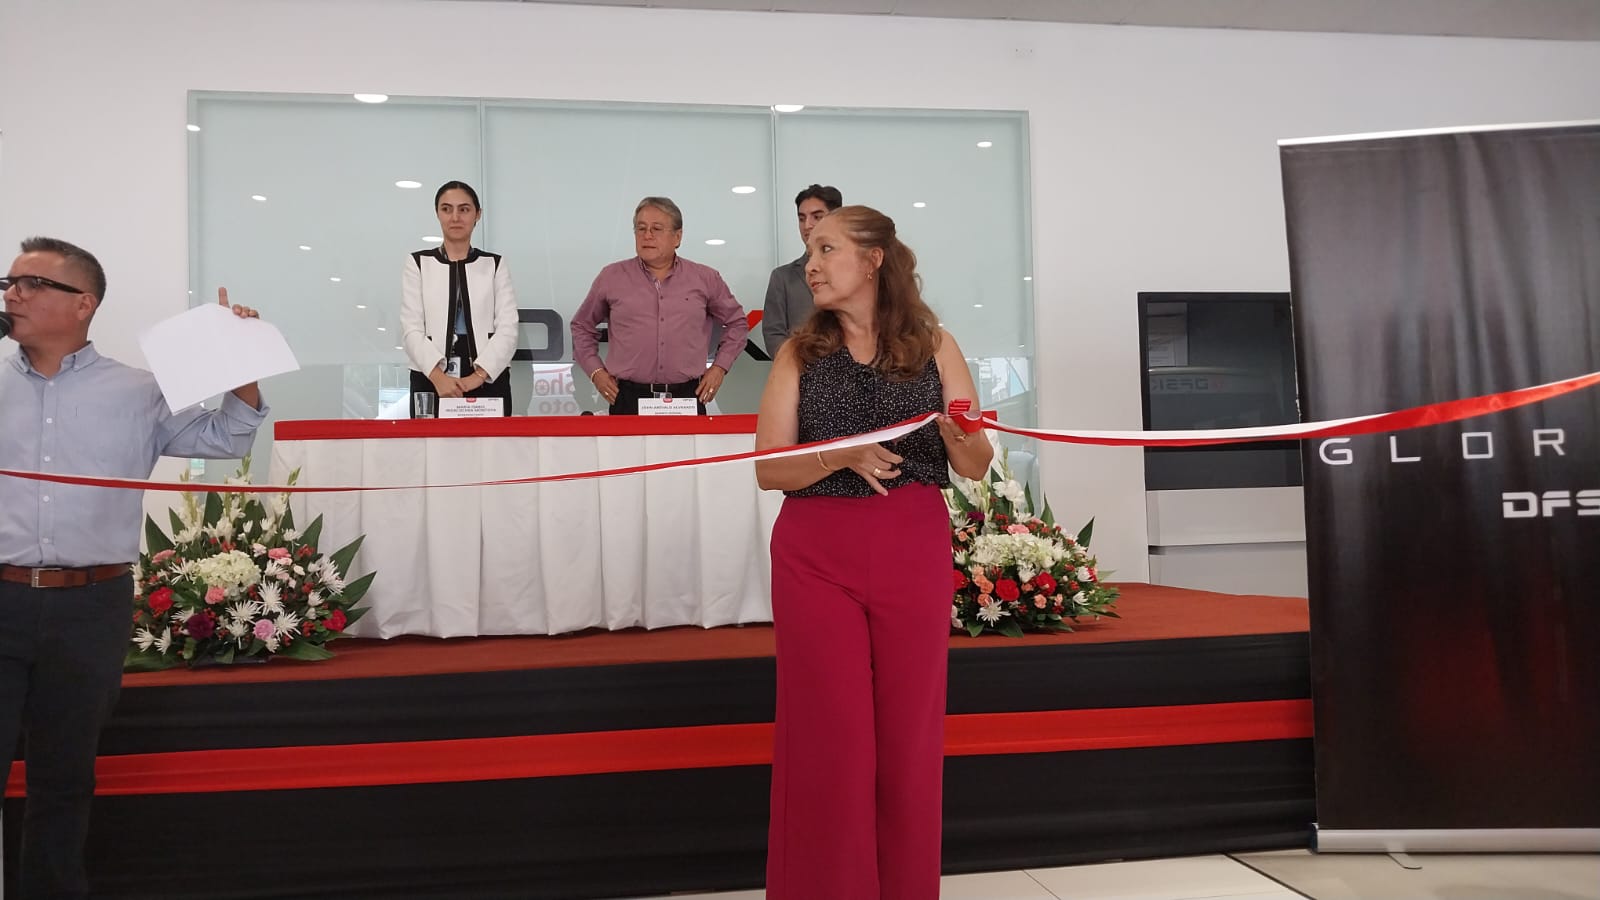 GLORY DFSK inaugura su primera tienda exclusiva en Tarapoto